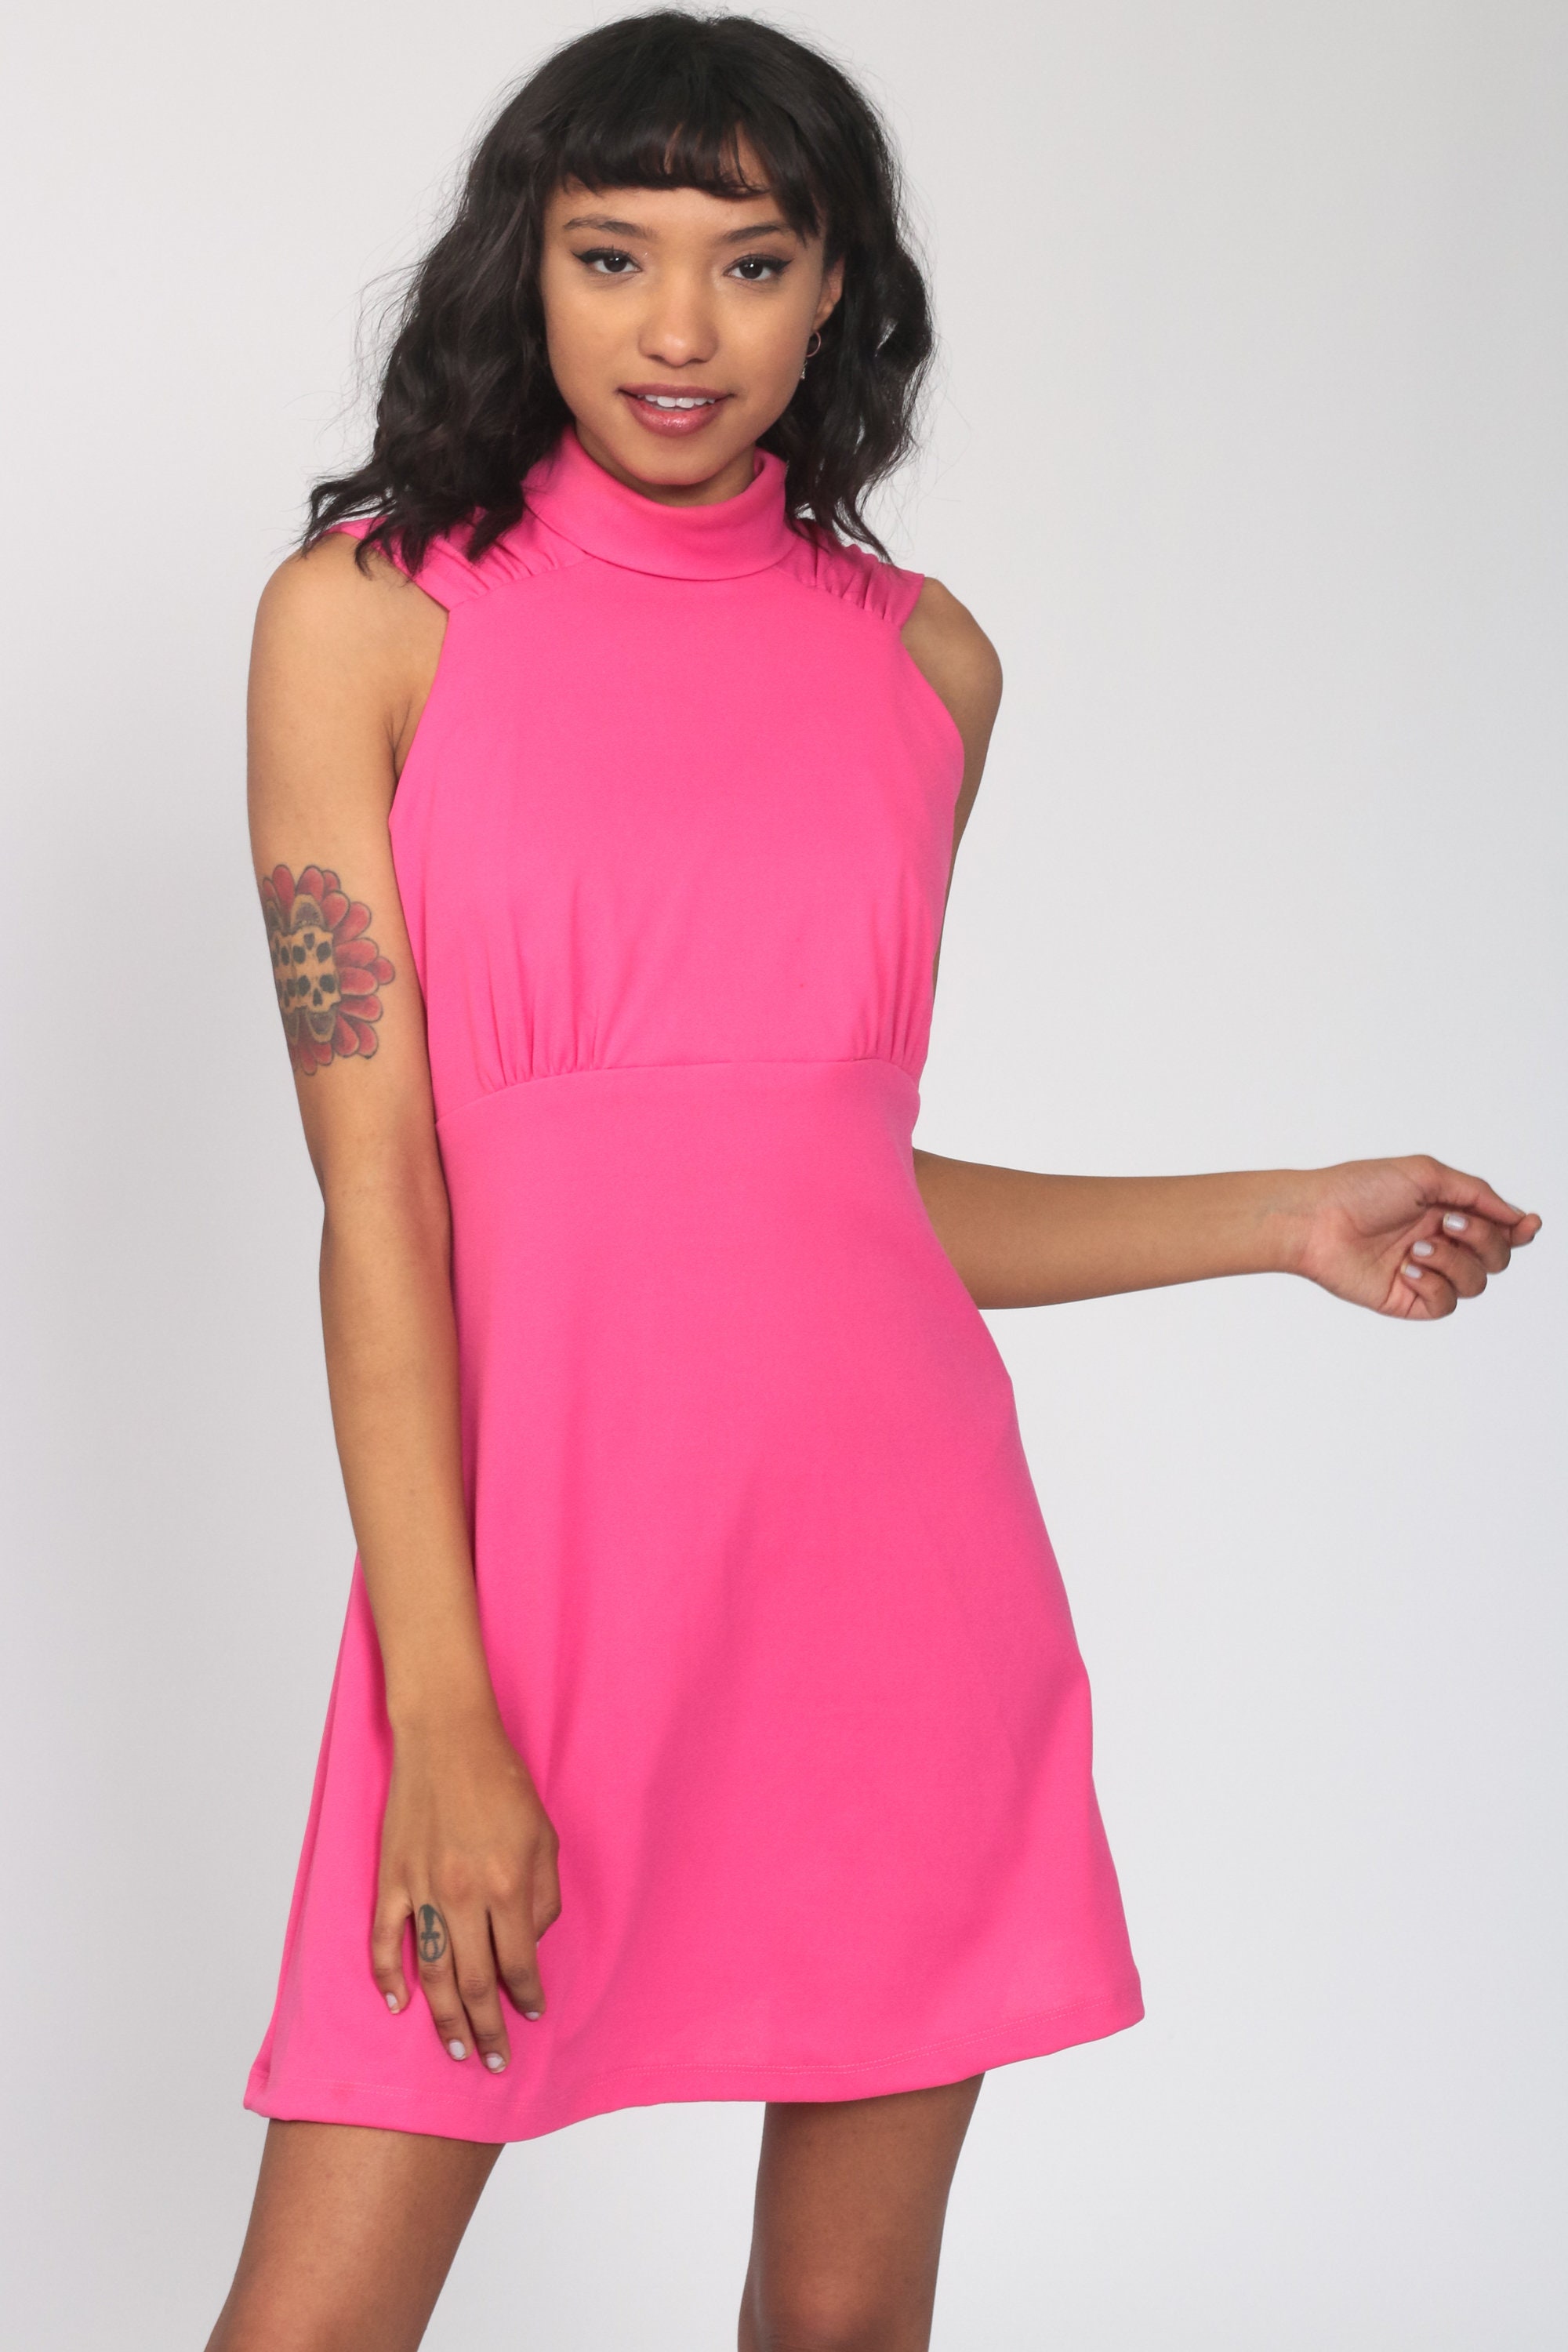 Hot Pink Babydoll Dress KEYHOLE BACK 70s Empire Waist Mod Mini Dress ...